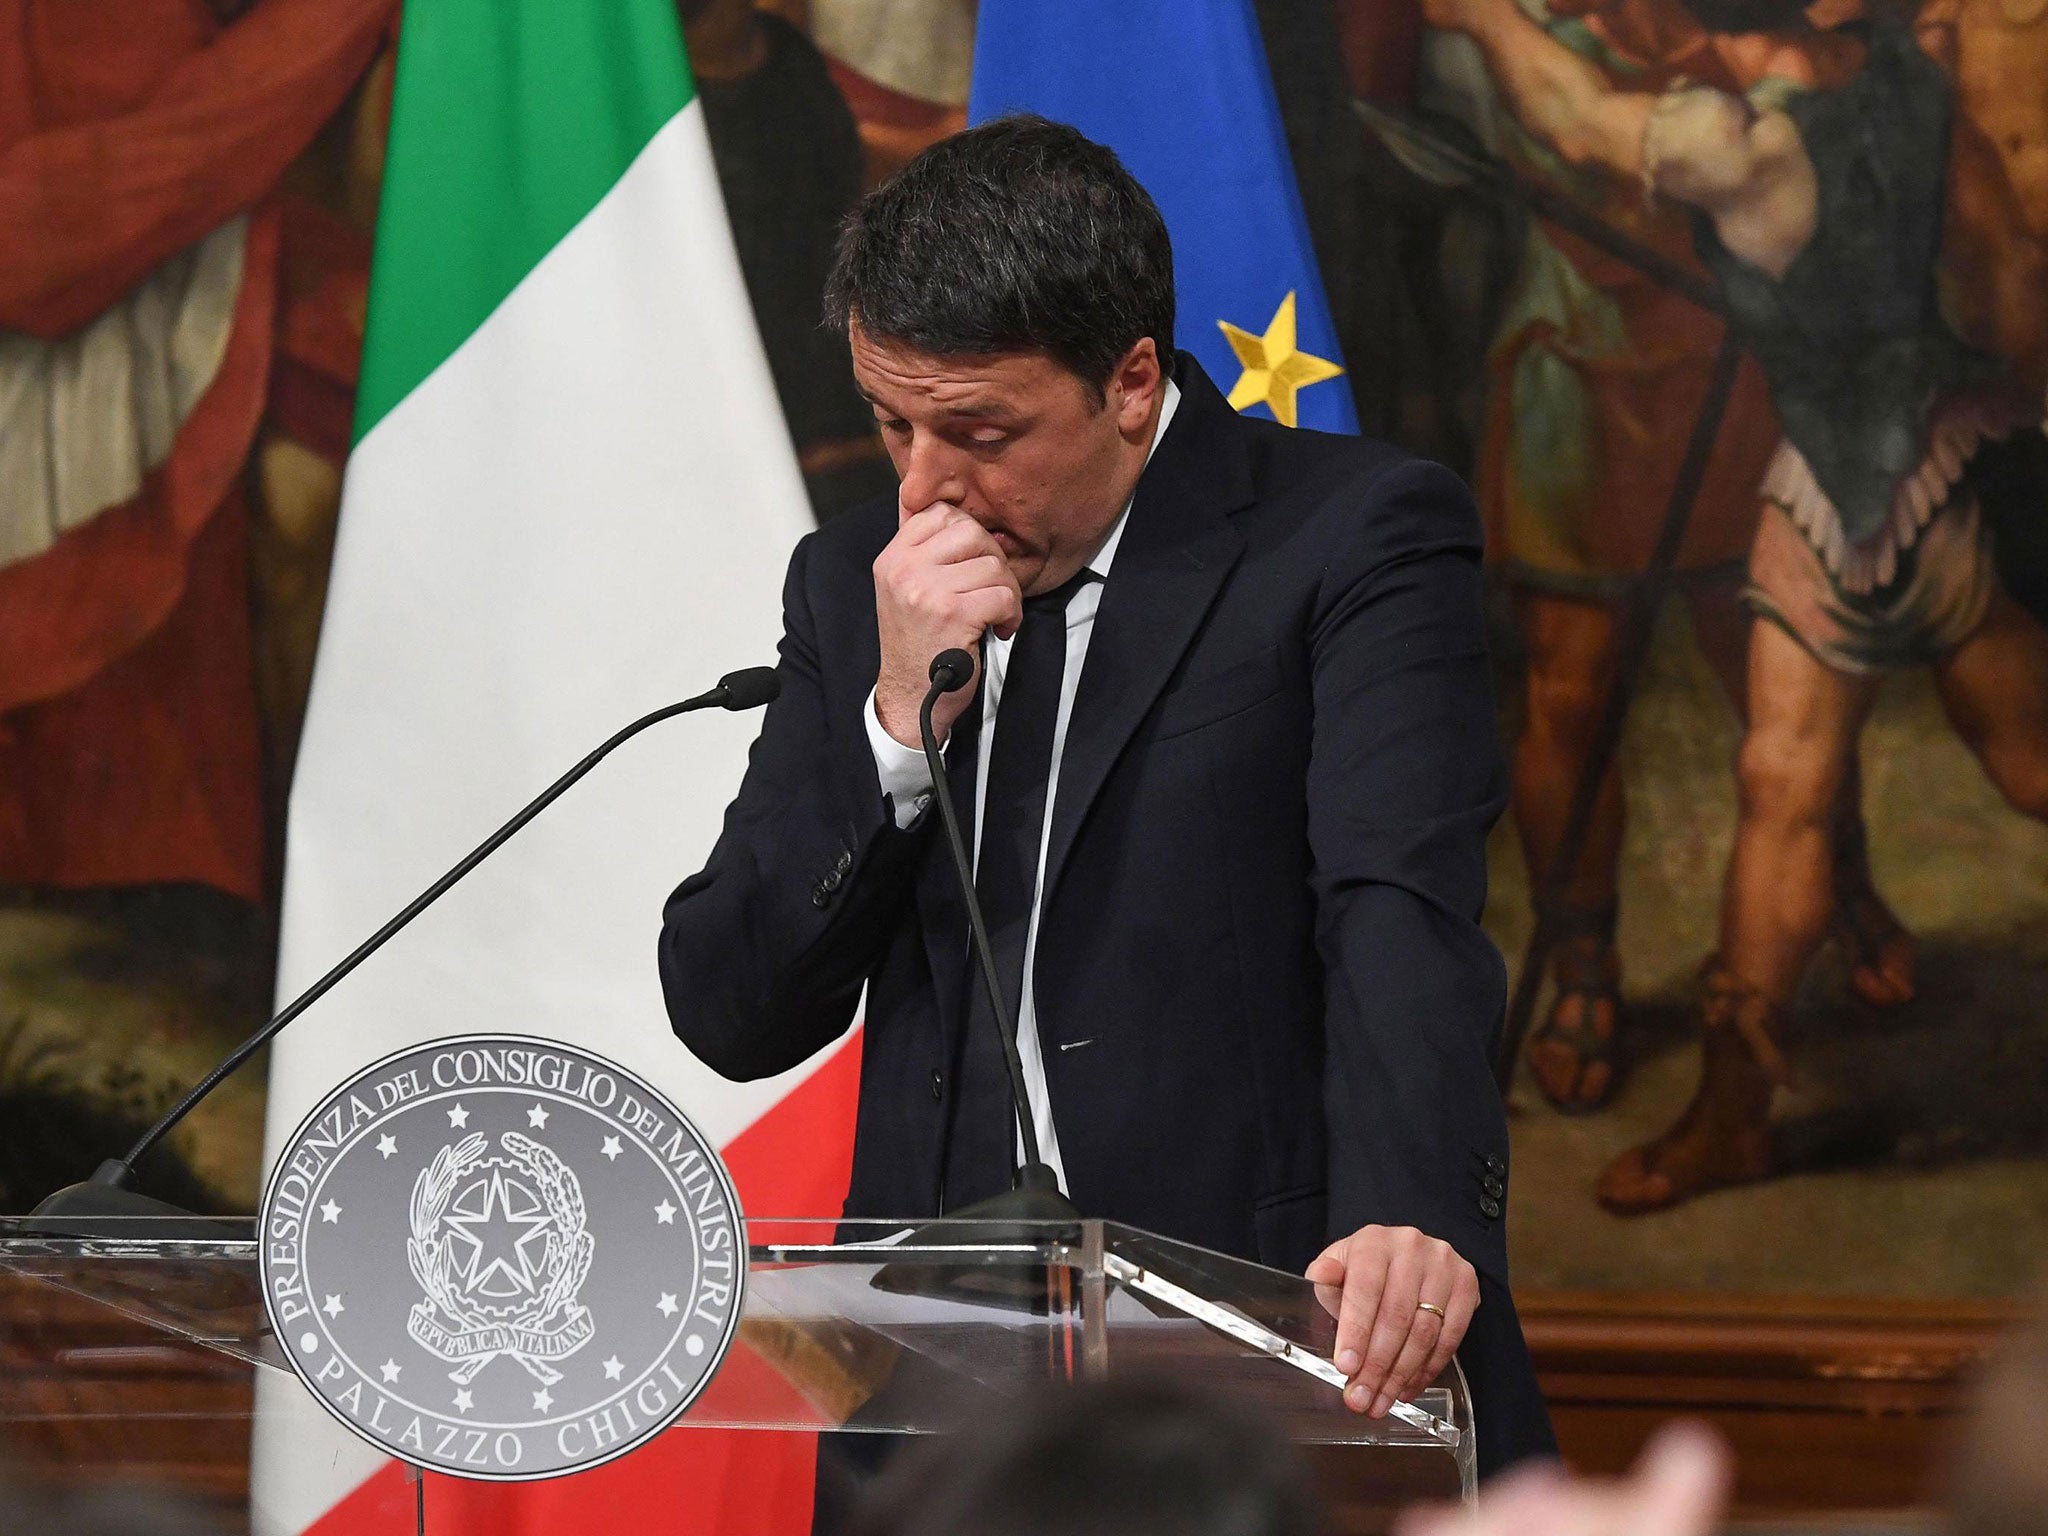 Matteo Renzi resigned after losing a crucial referendum